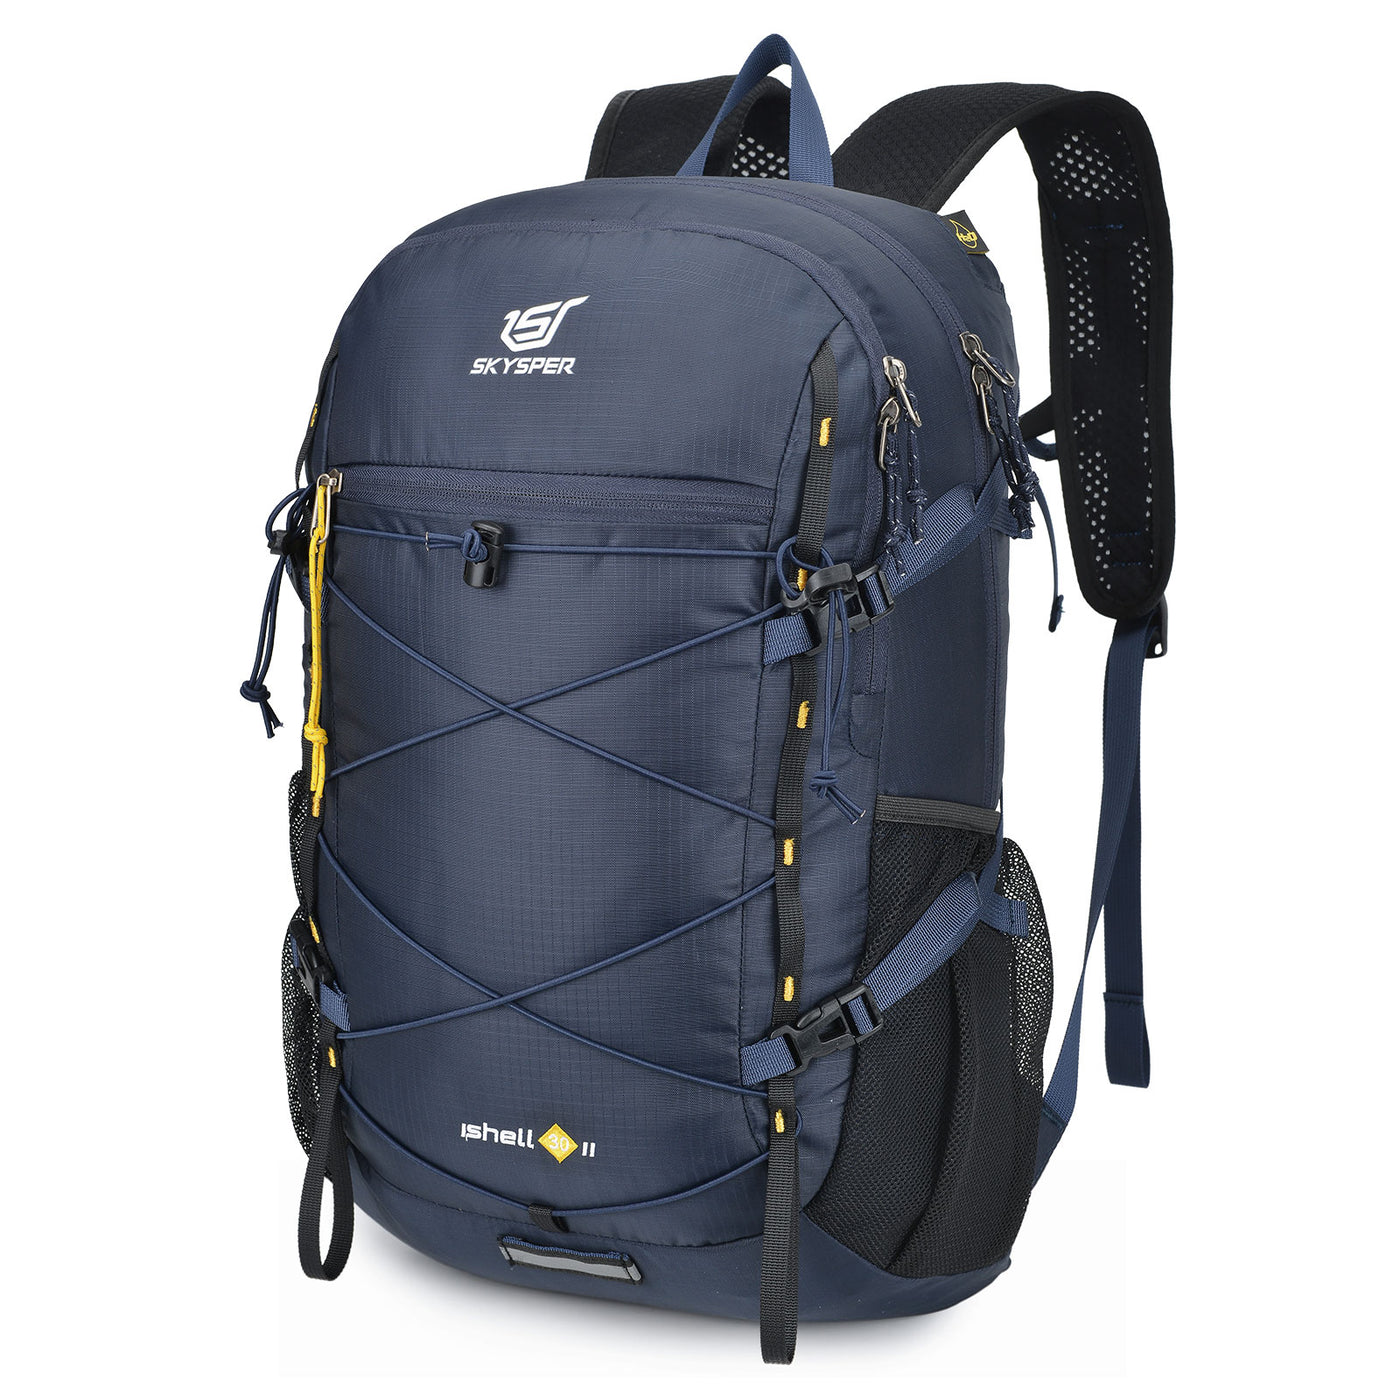 ISHELL30-II - SKYSPER 30L Lightweight Packable Backpack